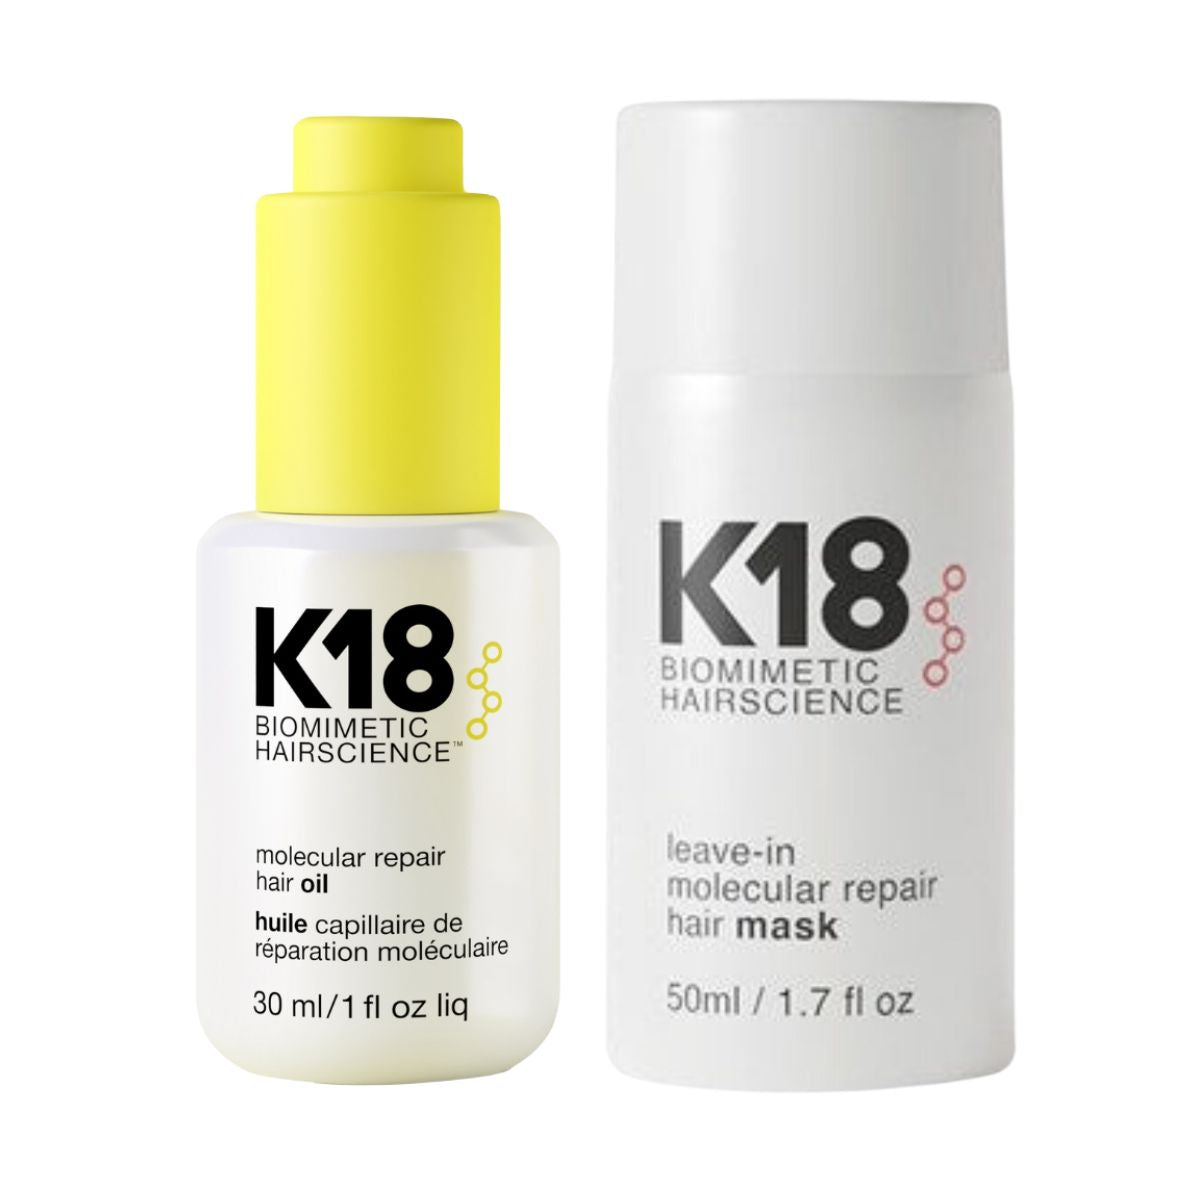 K18 Molecular Repair Hair Oil & K18 Leave-in Molecular Repair Hair Mask 50ml Bundle